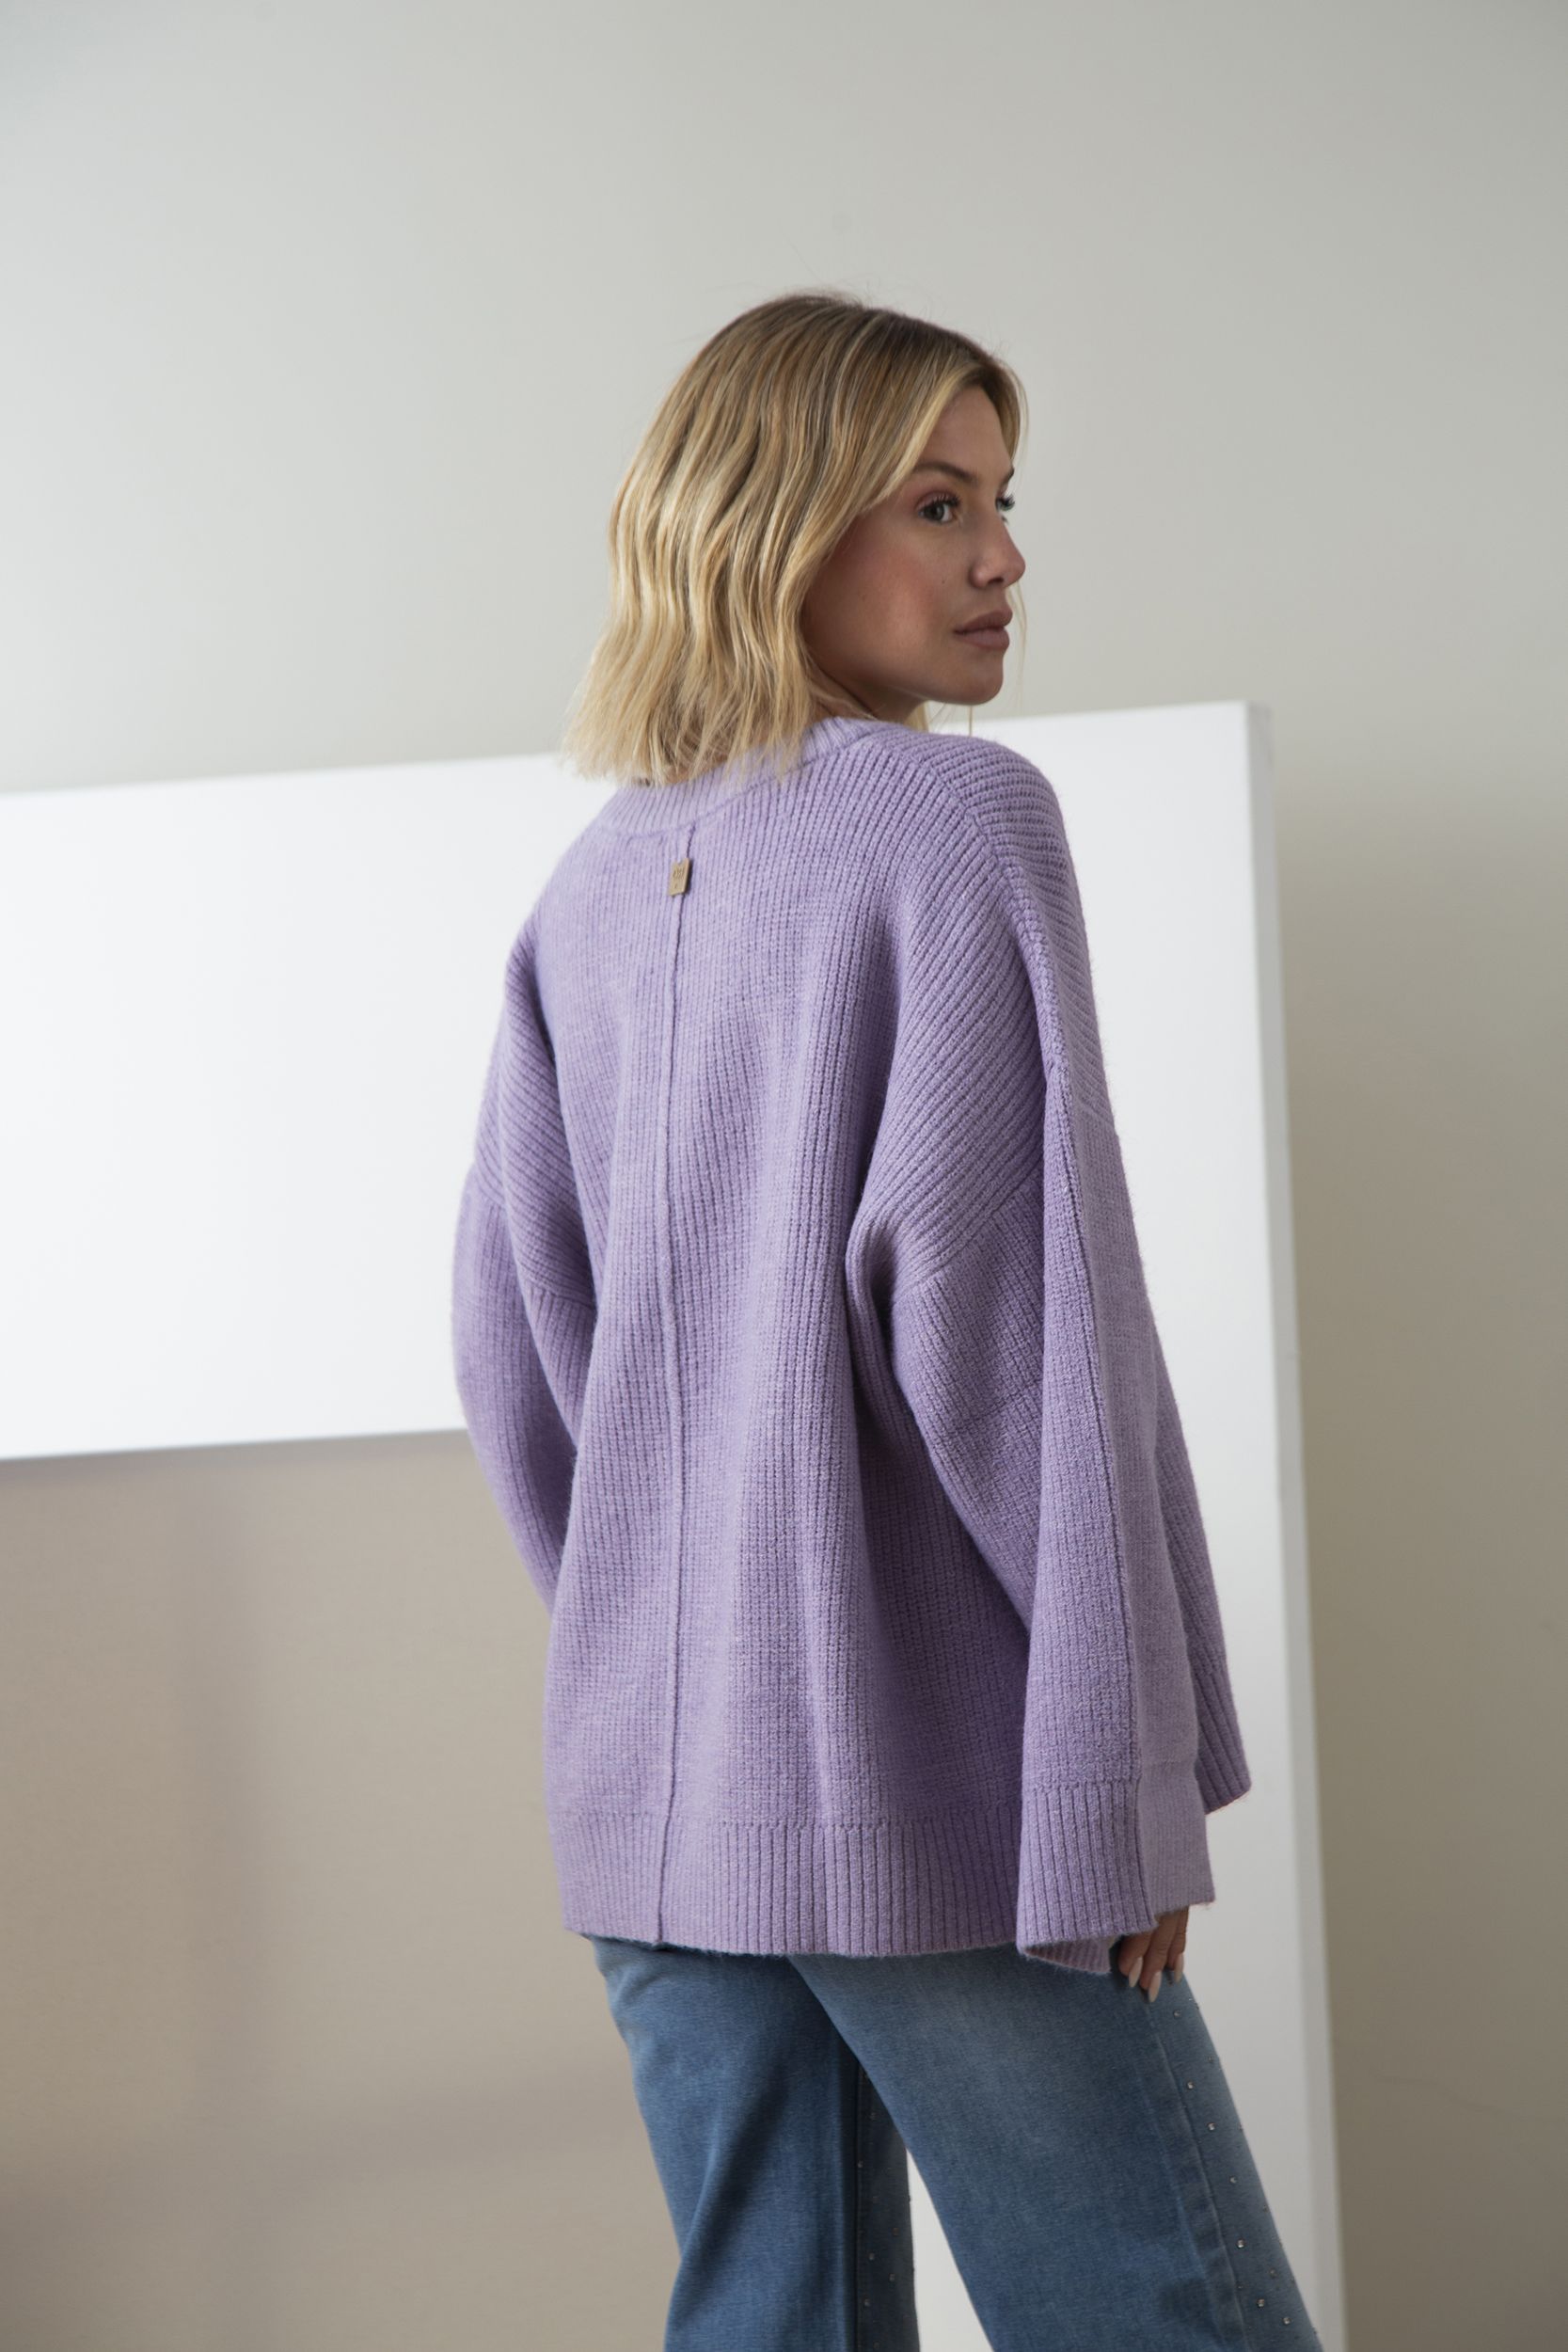 758-sweater-yamila-lila-2.jpg